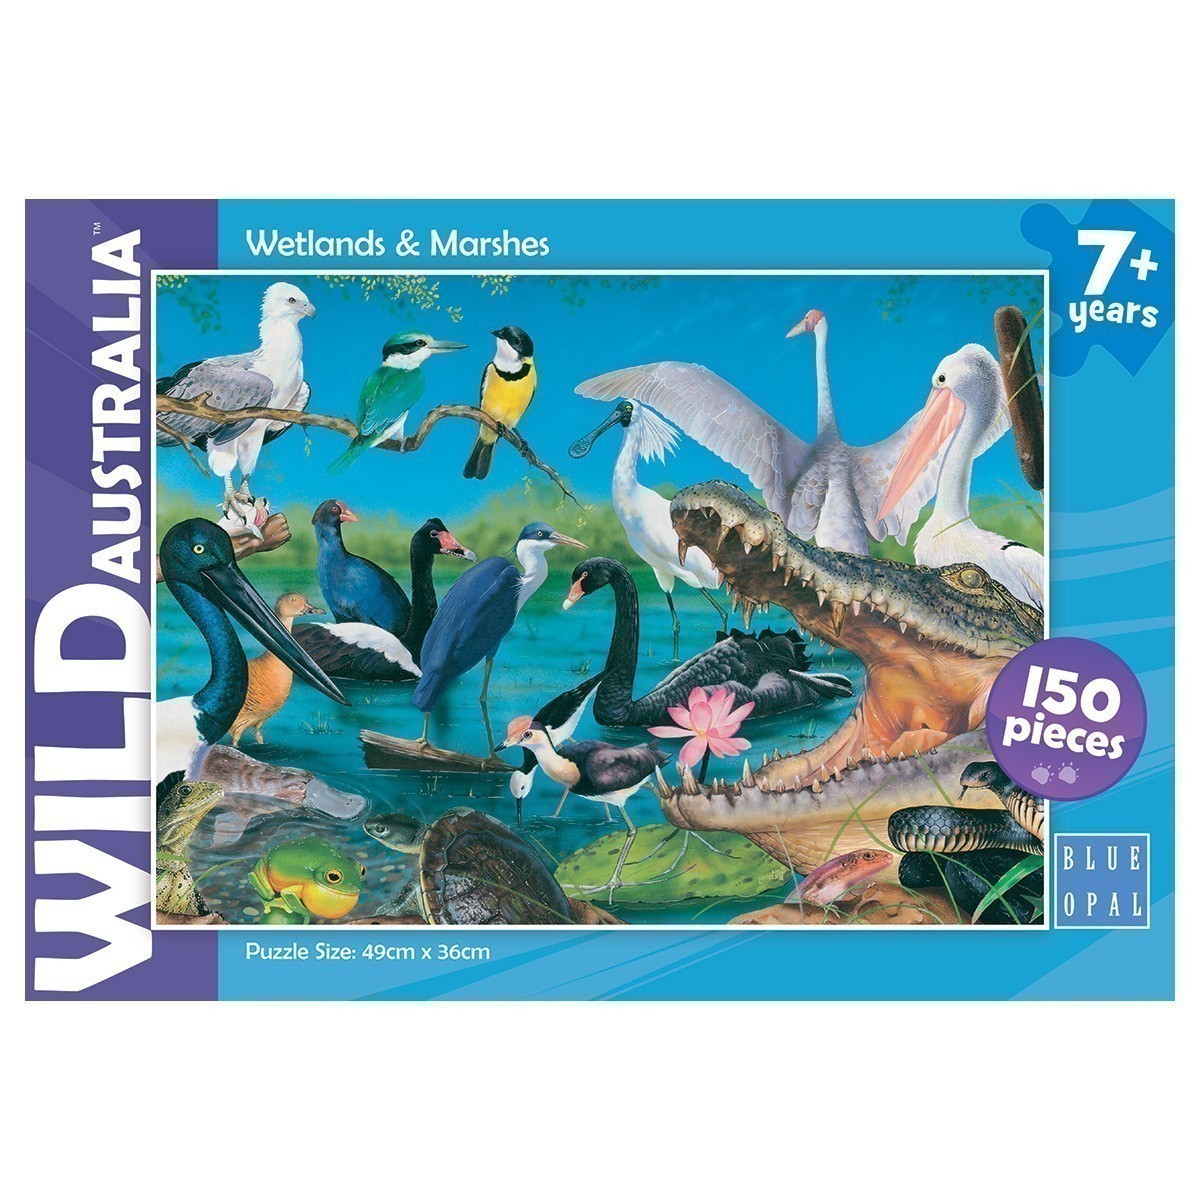 Blue Opal - Wild Australia - Wetlands & Marshes - 150 Piece Puzzle